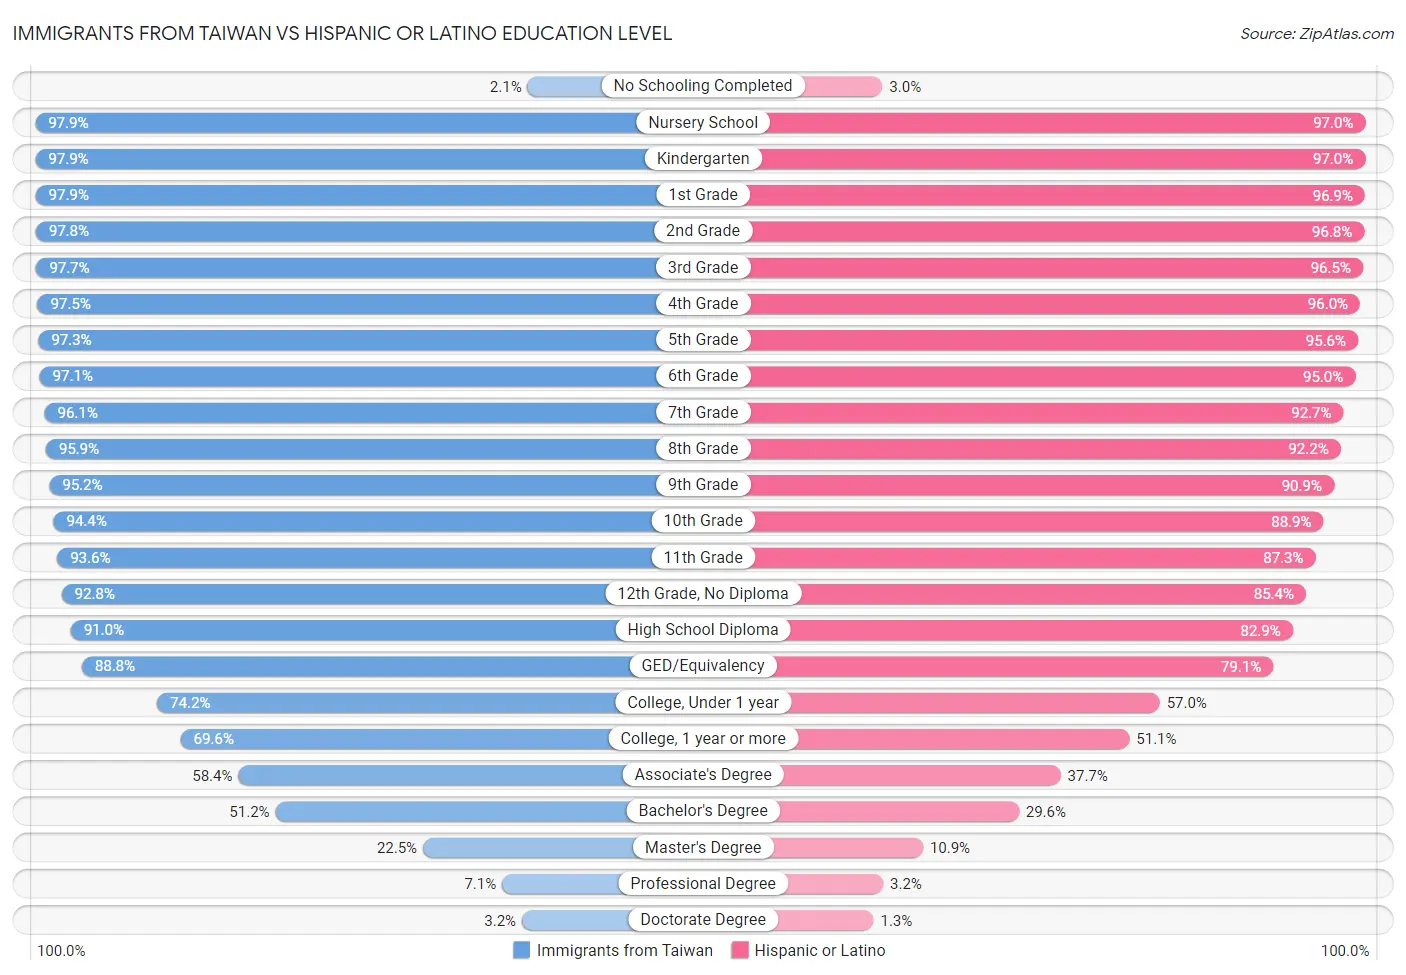 Immigrants from Taiwan vs Hispanic or Latino Education Level